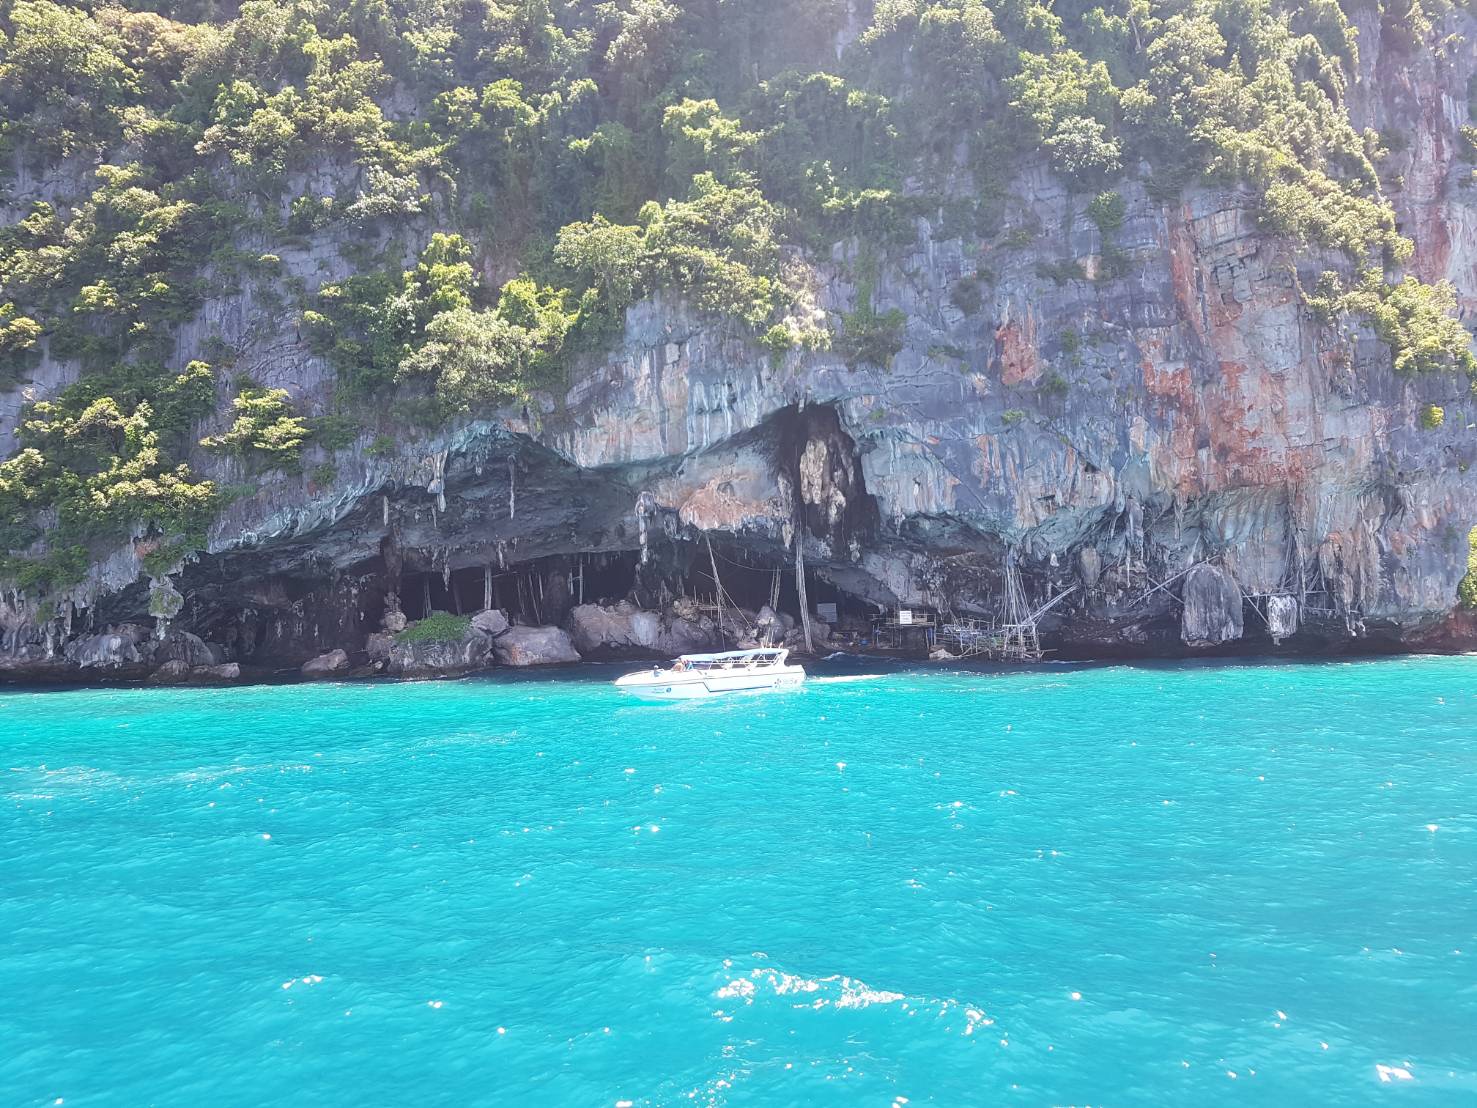 Phi Phi - Maya - Bamboo Island tour by Cruise Boat 